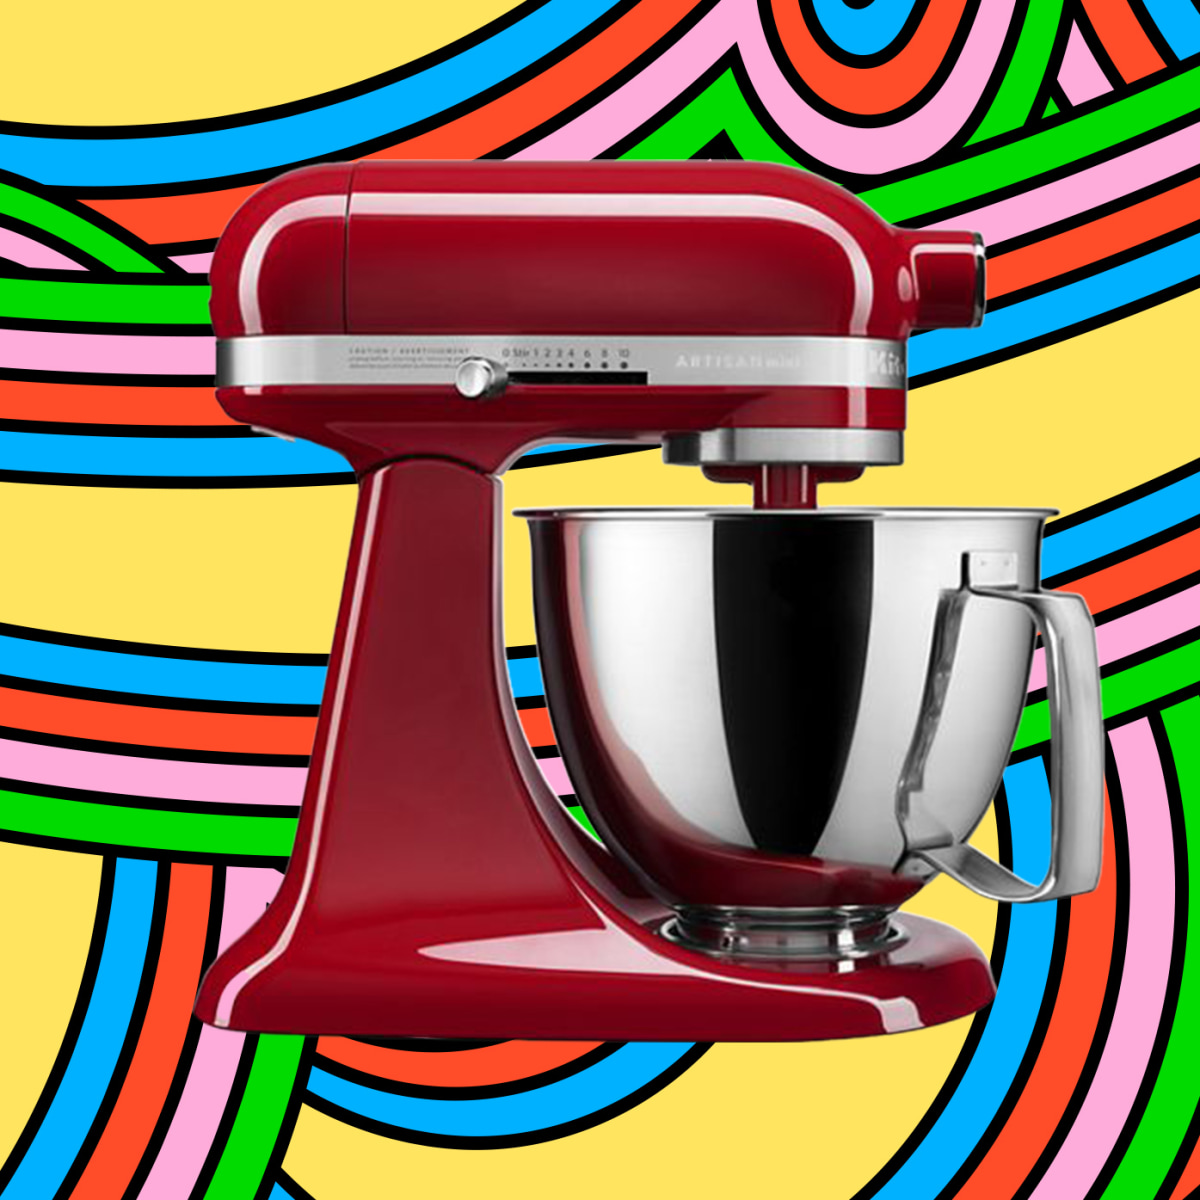 KitchenAid's Artisan Mini Is the Best Mixer for Millennials